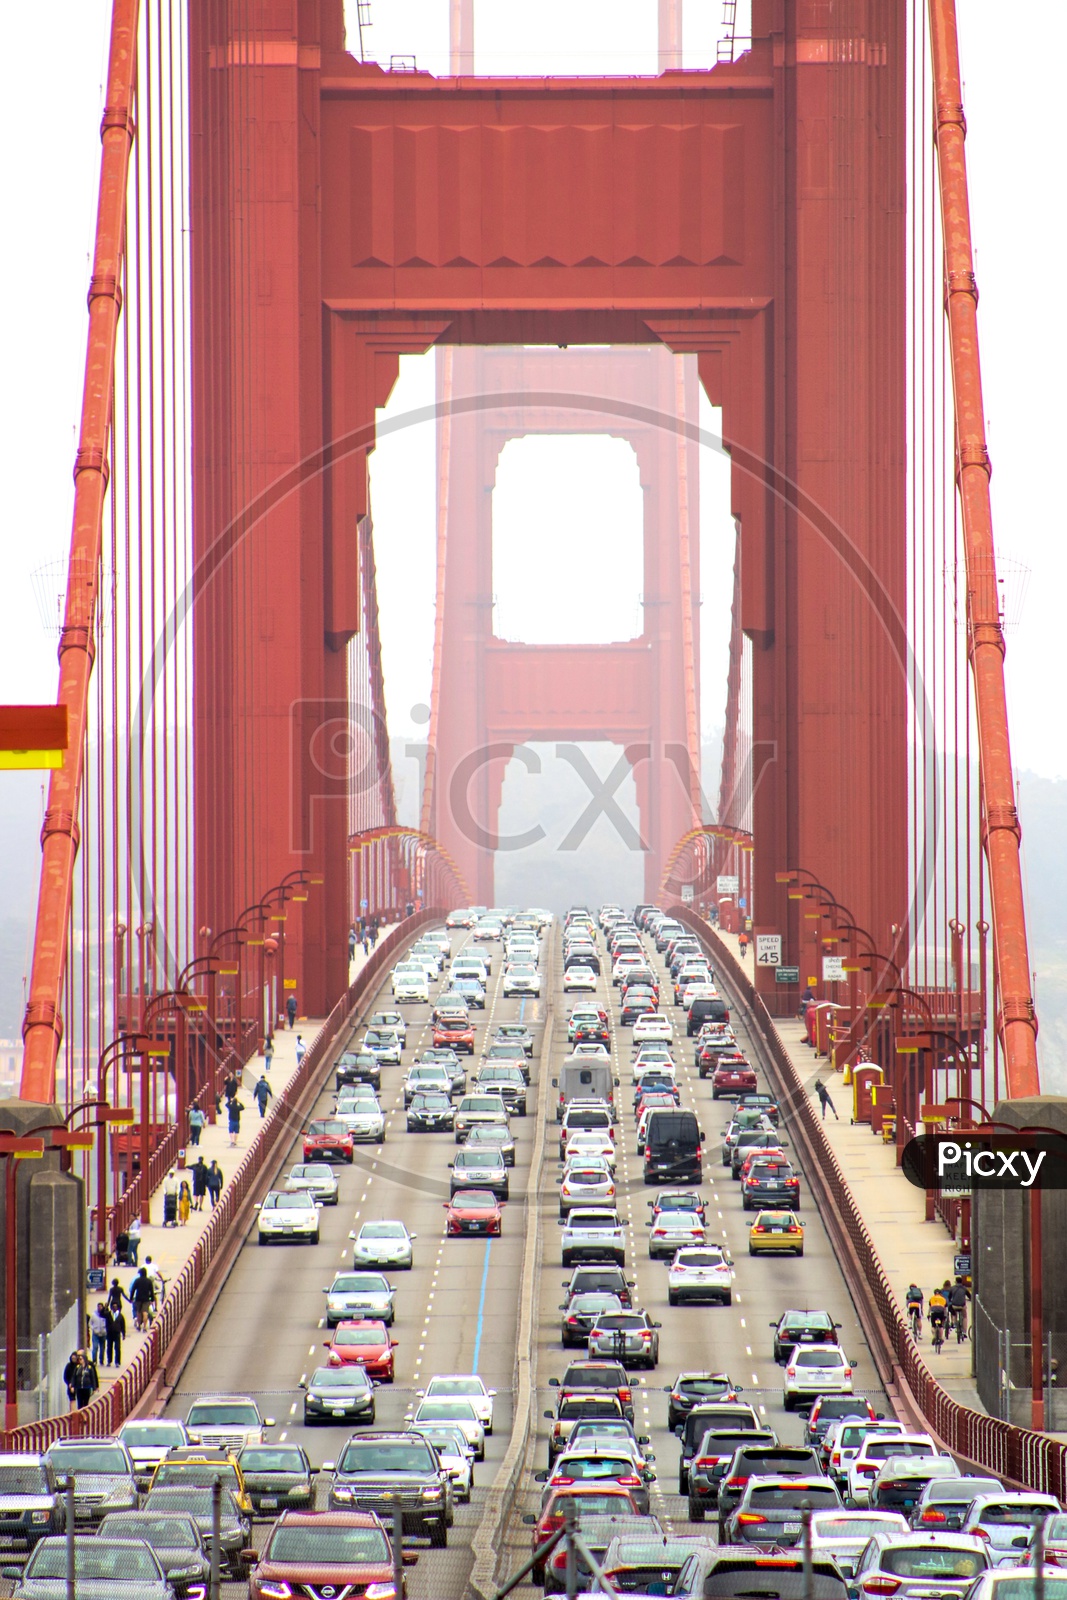 Golden Gate Bridge With Cars Moving in Queues on Bridge